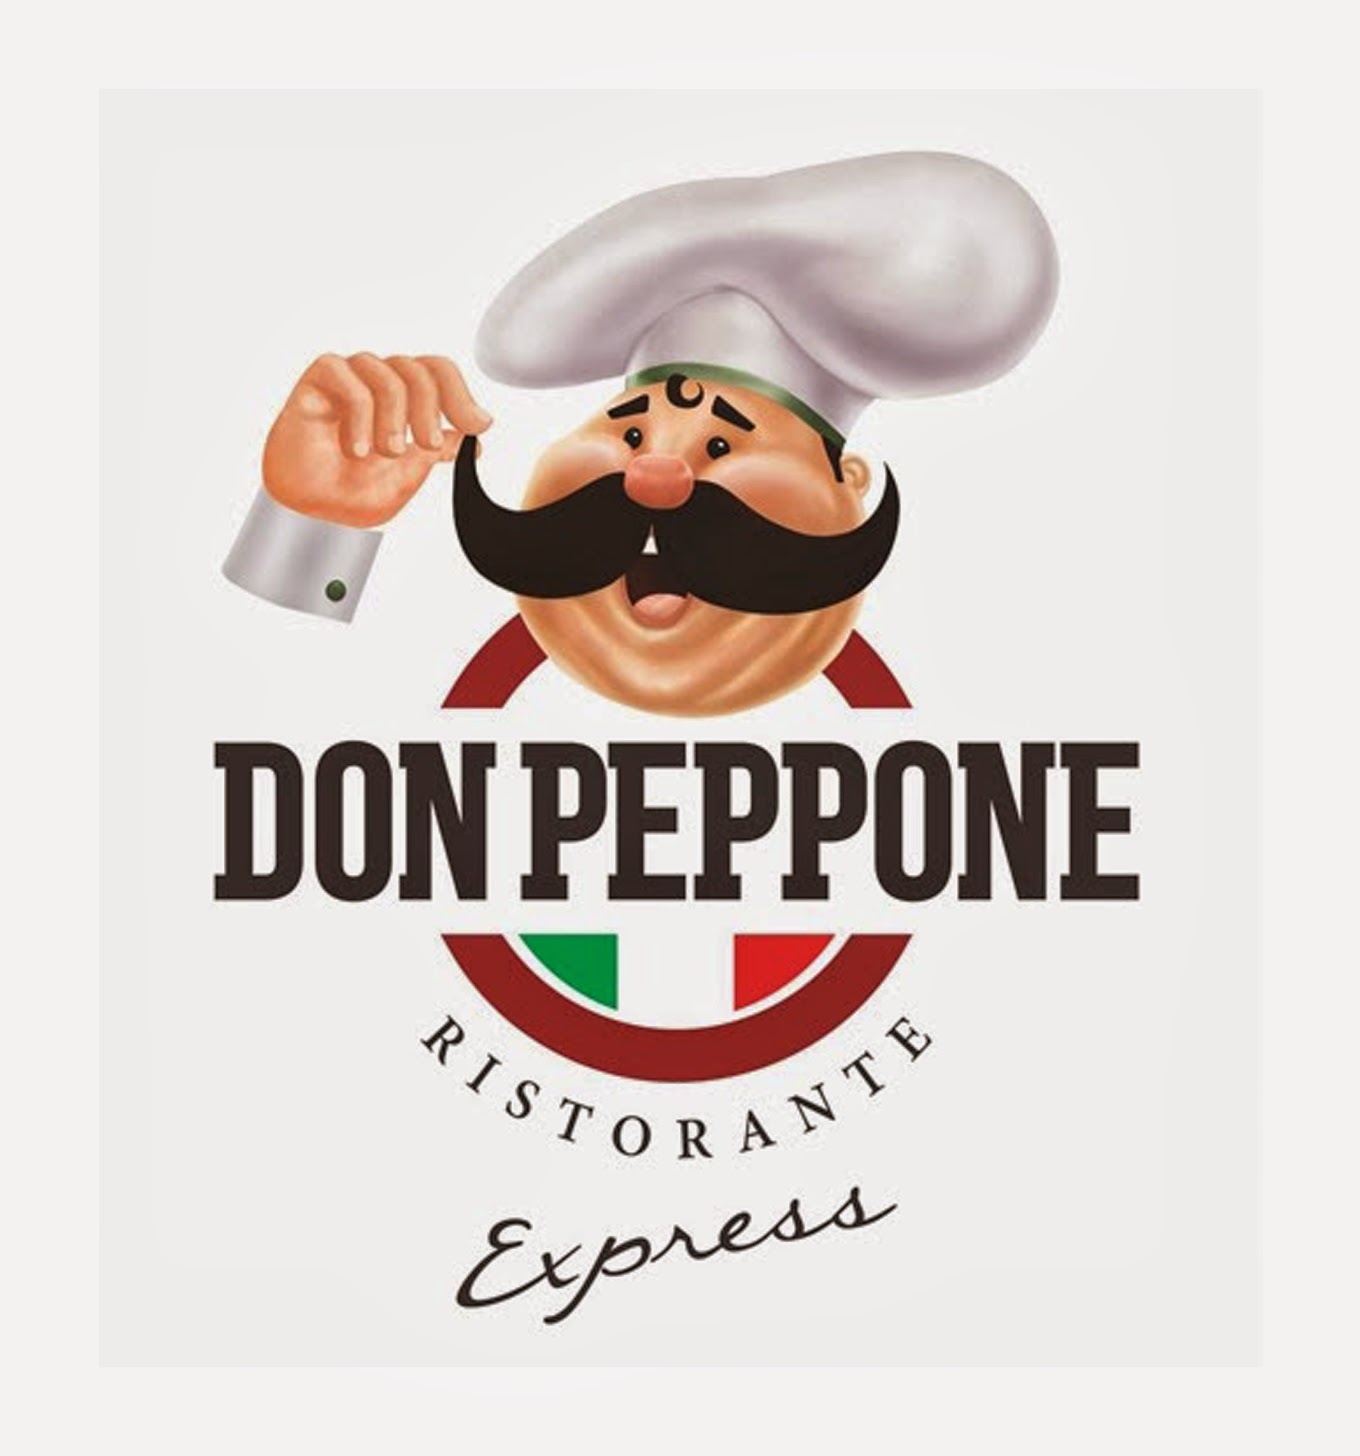 Don Peppone Ristorante Express